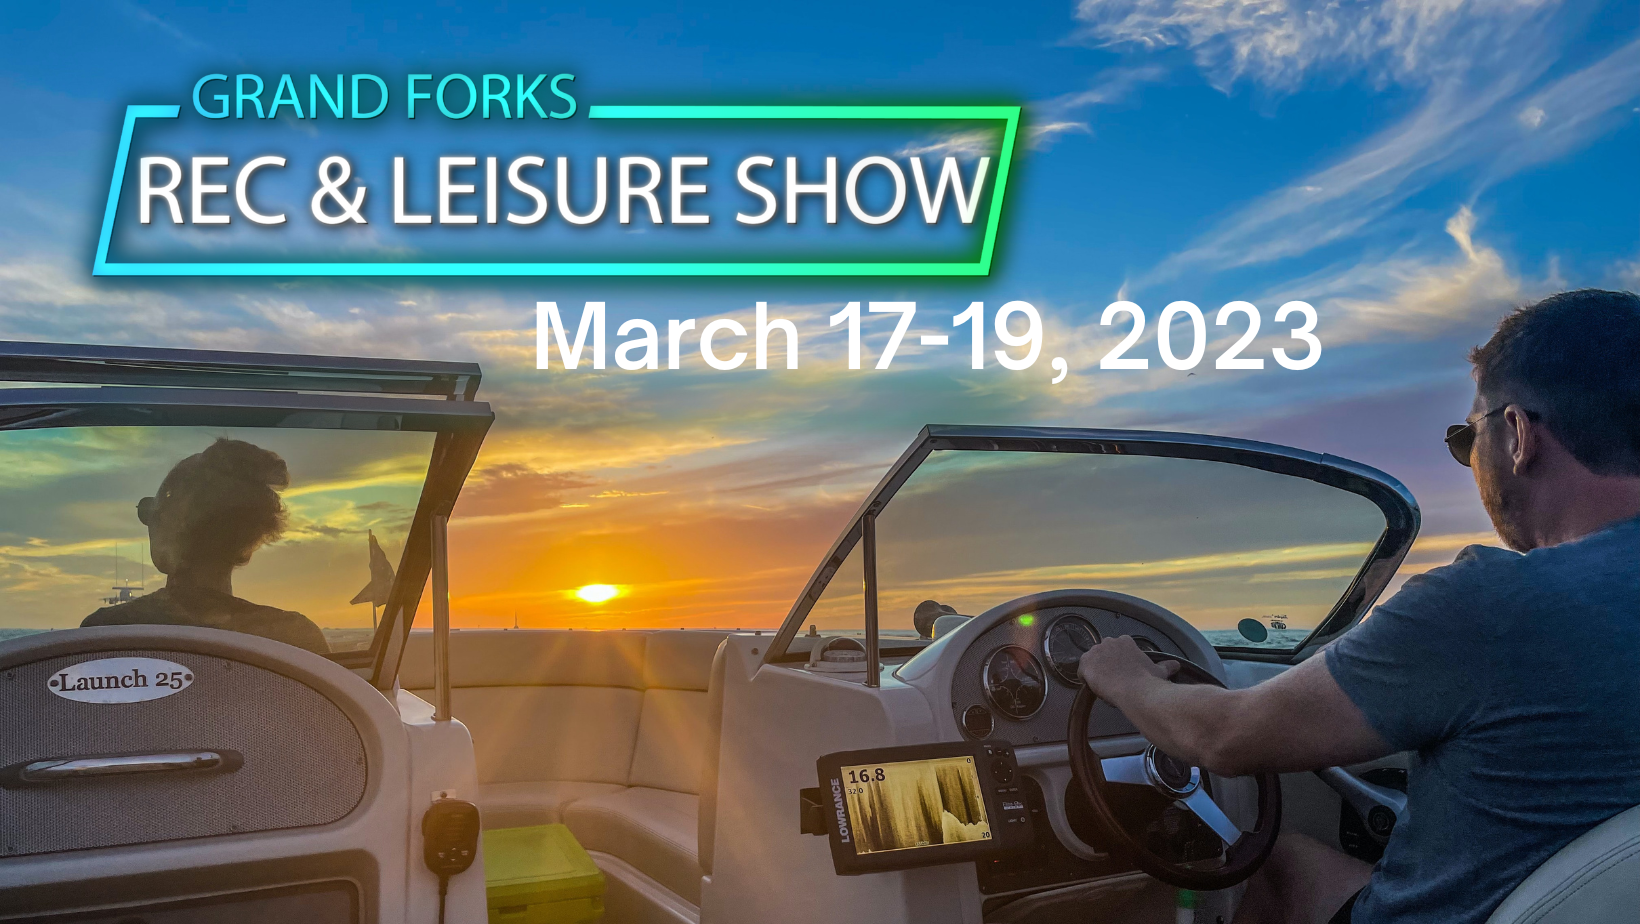 Grand Forks Rec & Leisure Show 2023